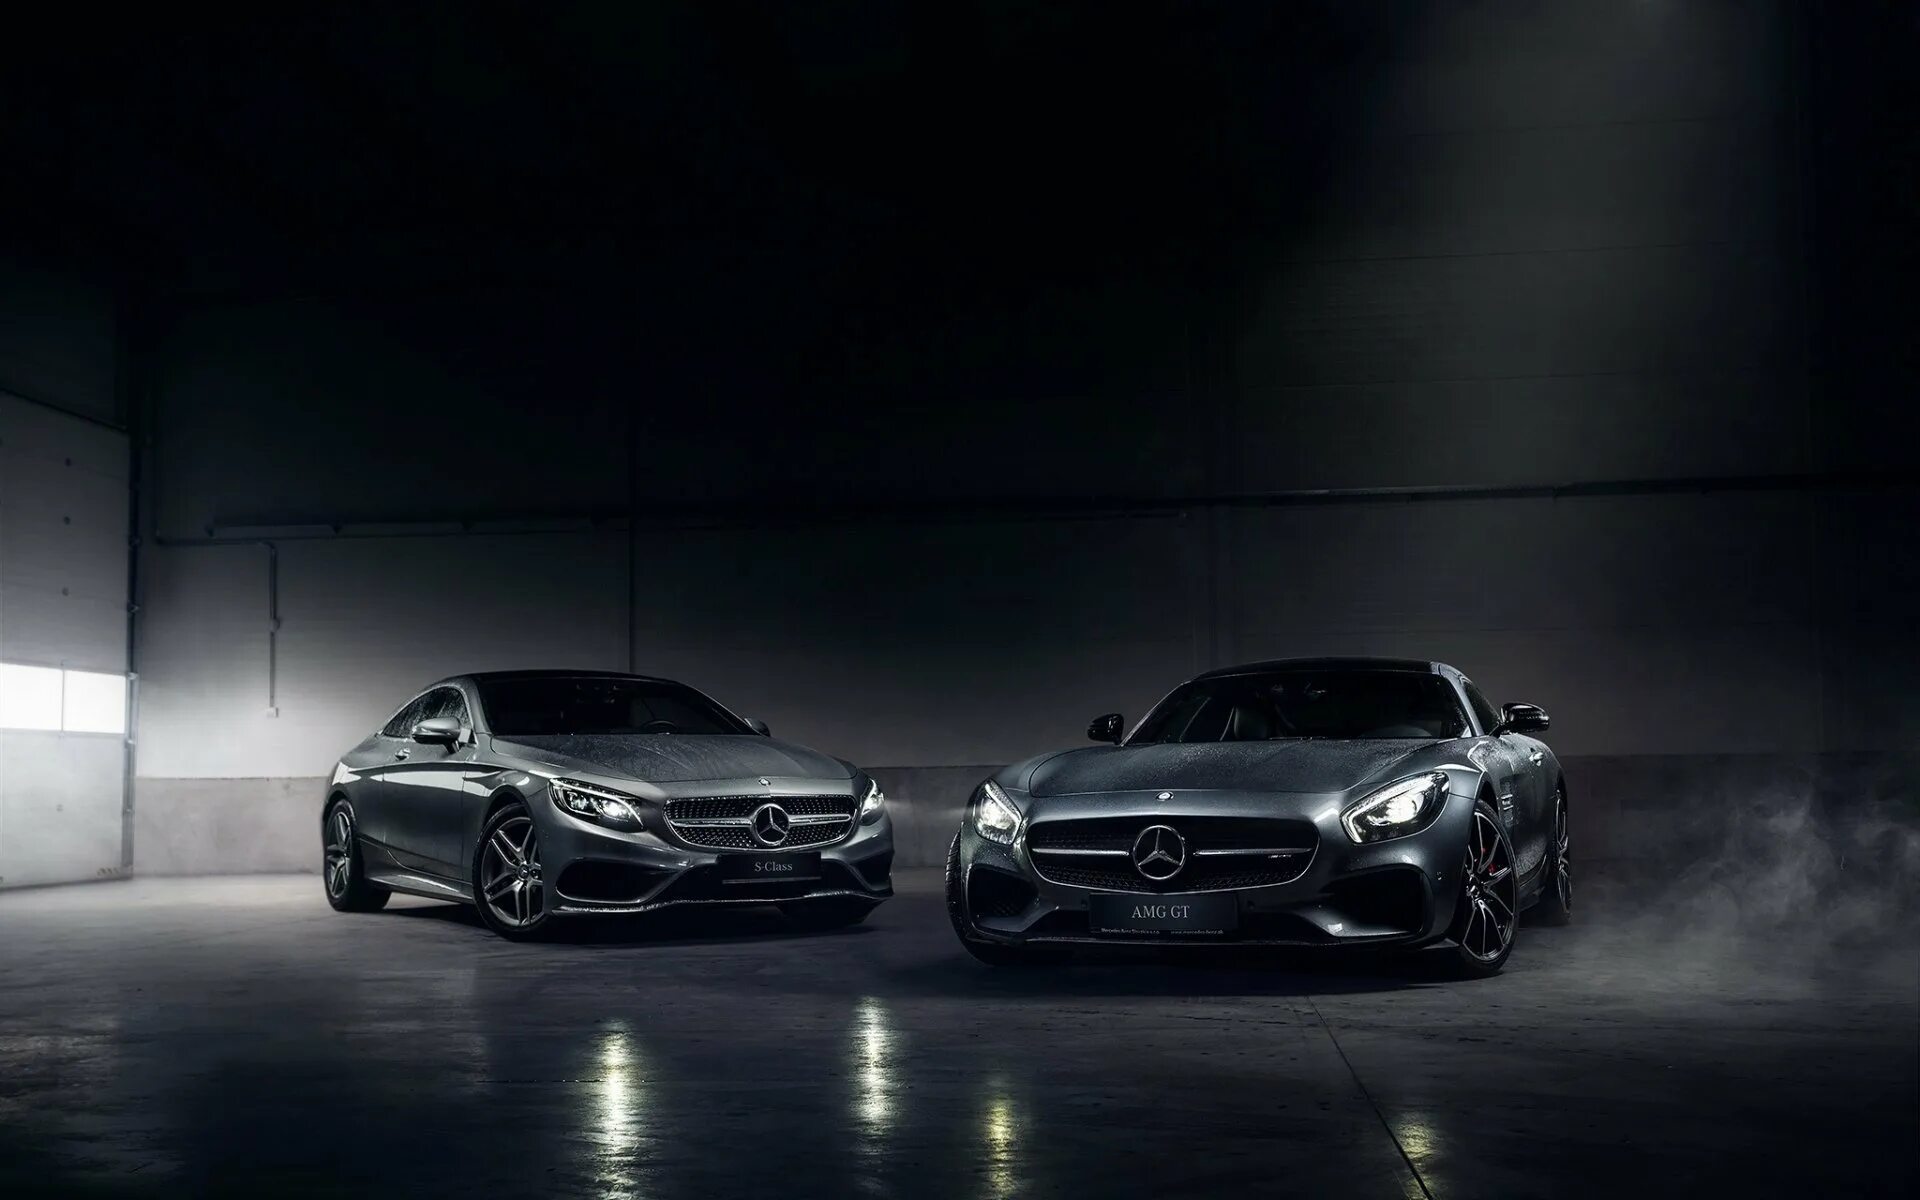 Мерседес на черном фоне. Mercedes Benz AMG. Mercedes Benz AMG gt 63 s. Мерседес АМГ 63 на черном фоне. Mercedes AMG e63 s черная.